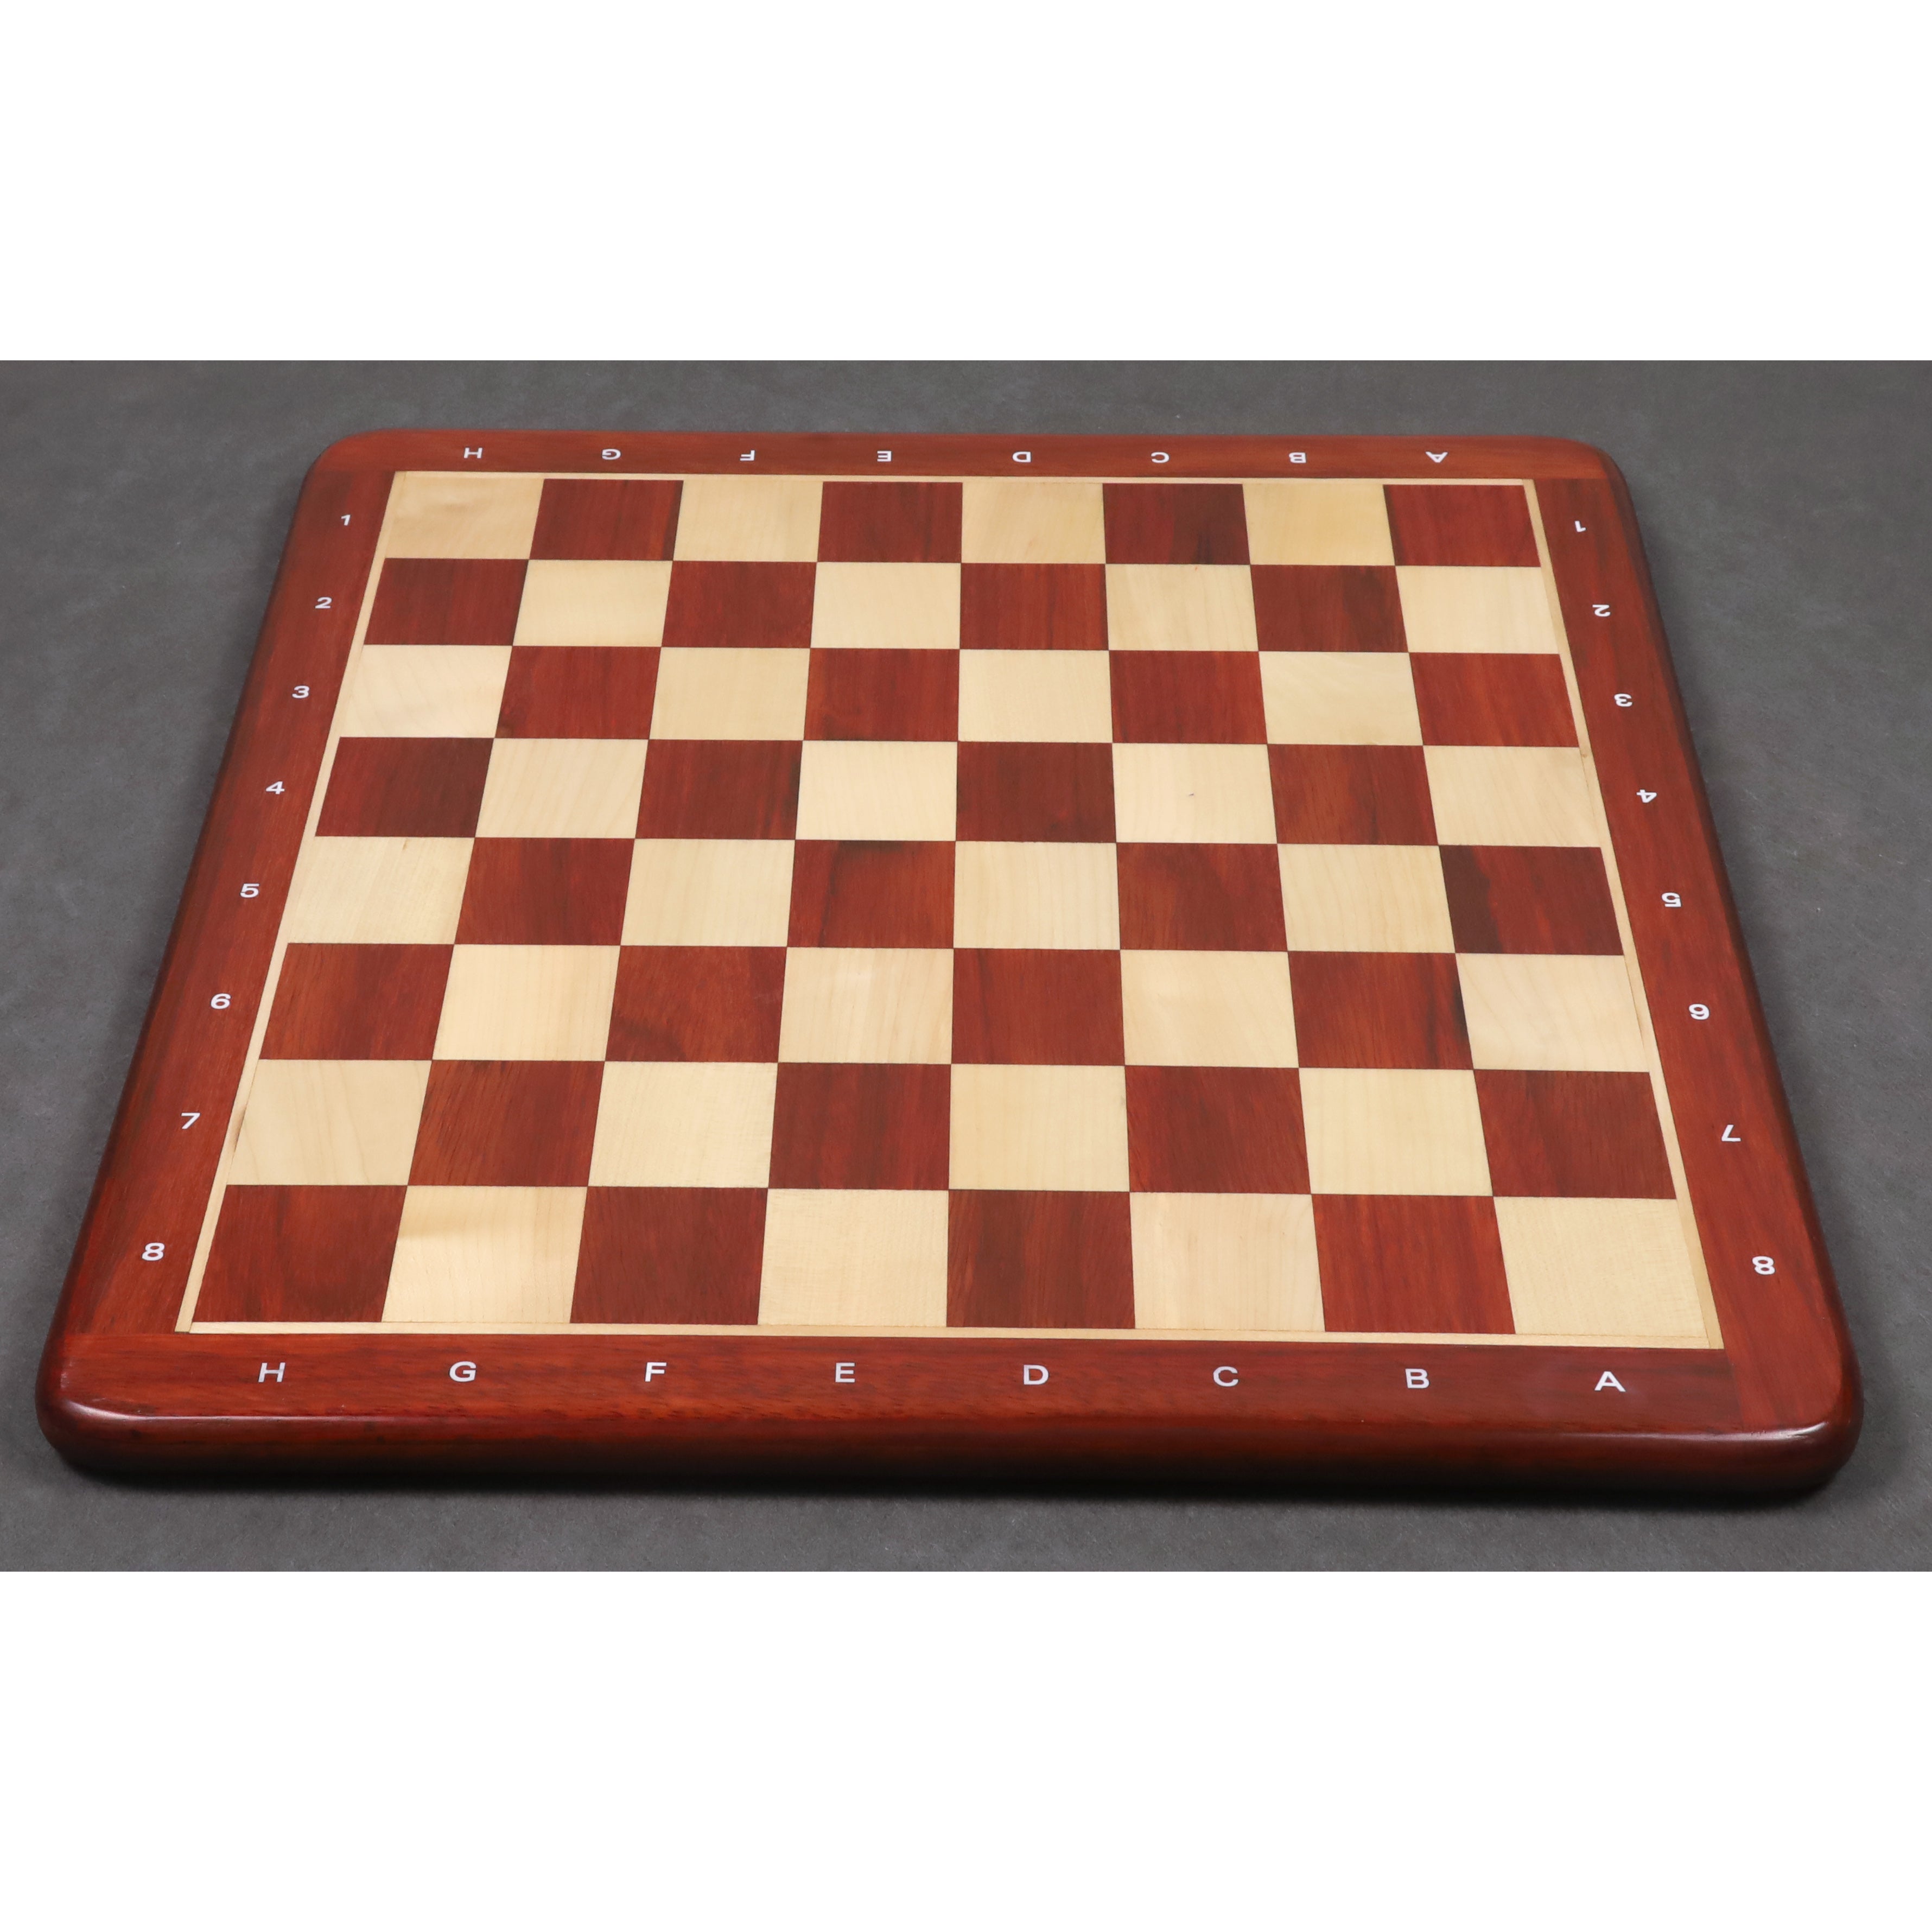 19″ Bud Rosewood & Maple Wood Chess board | Chessboard | Flat Chess Board